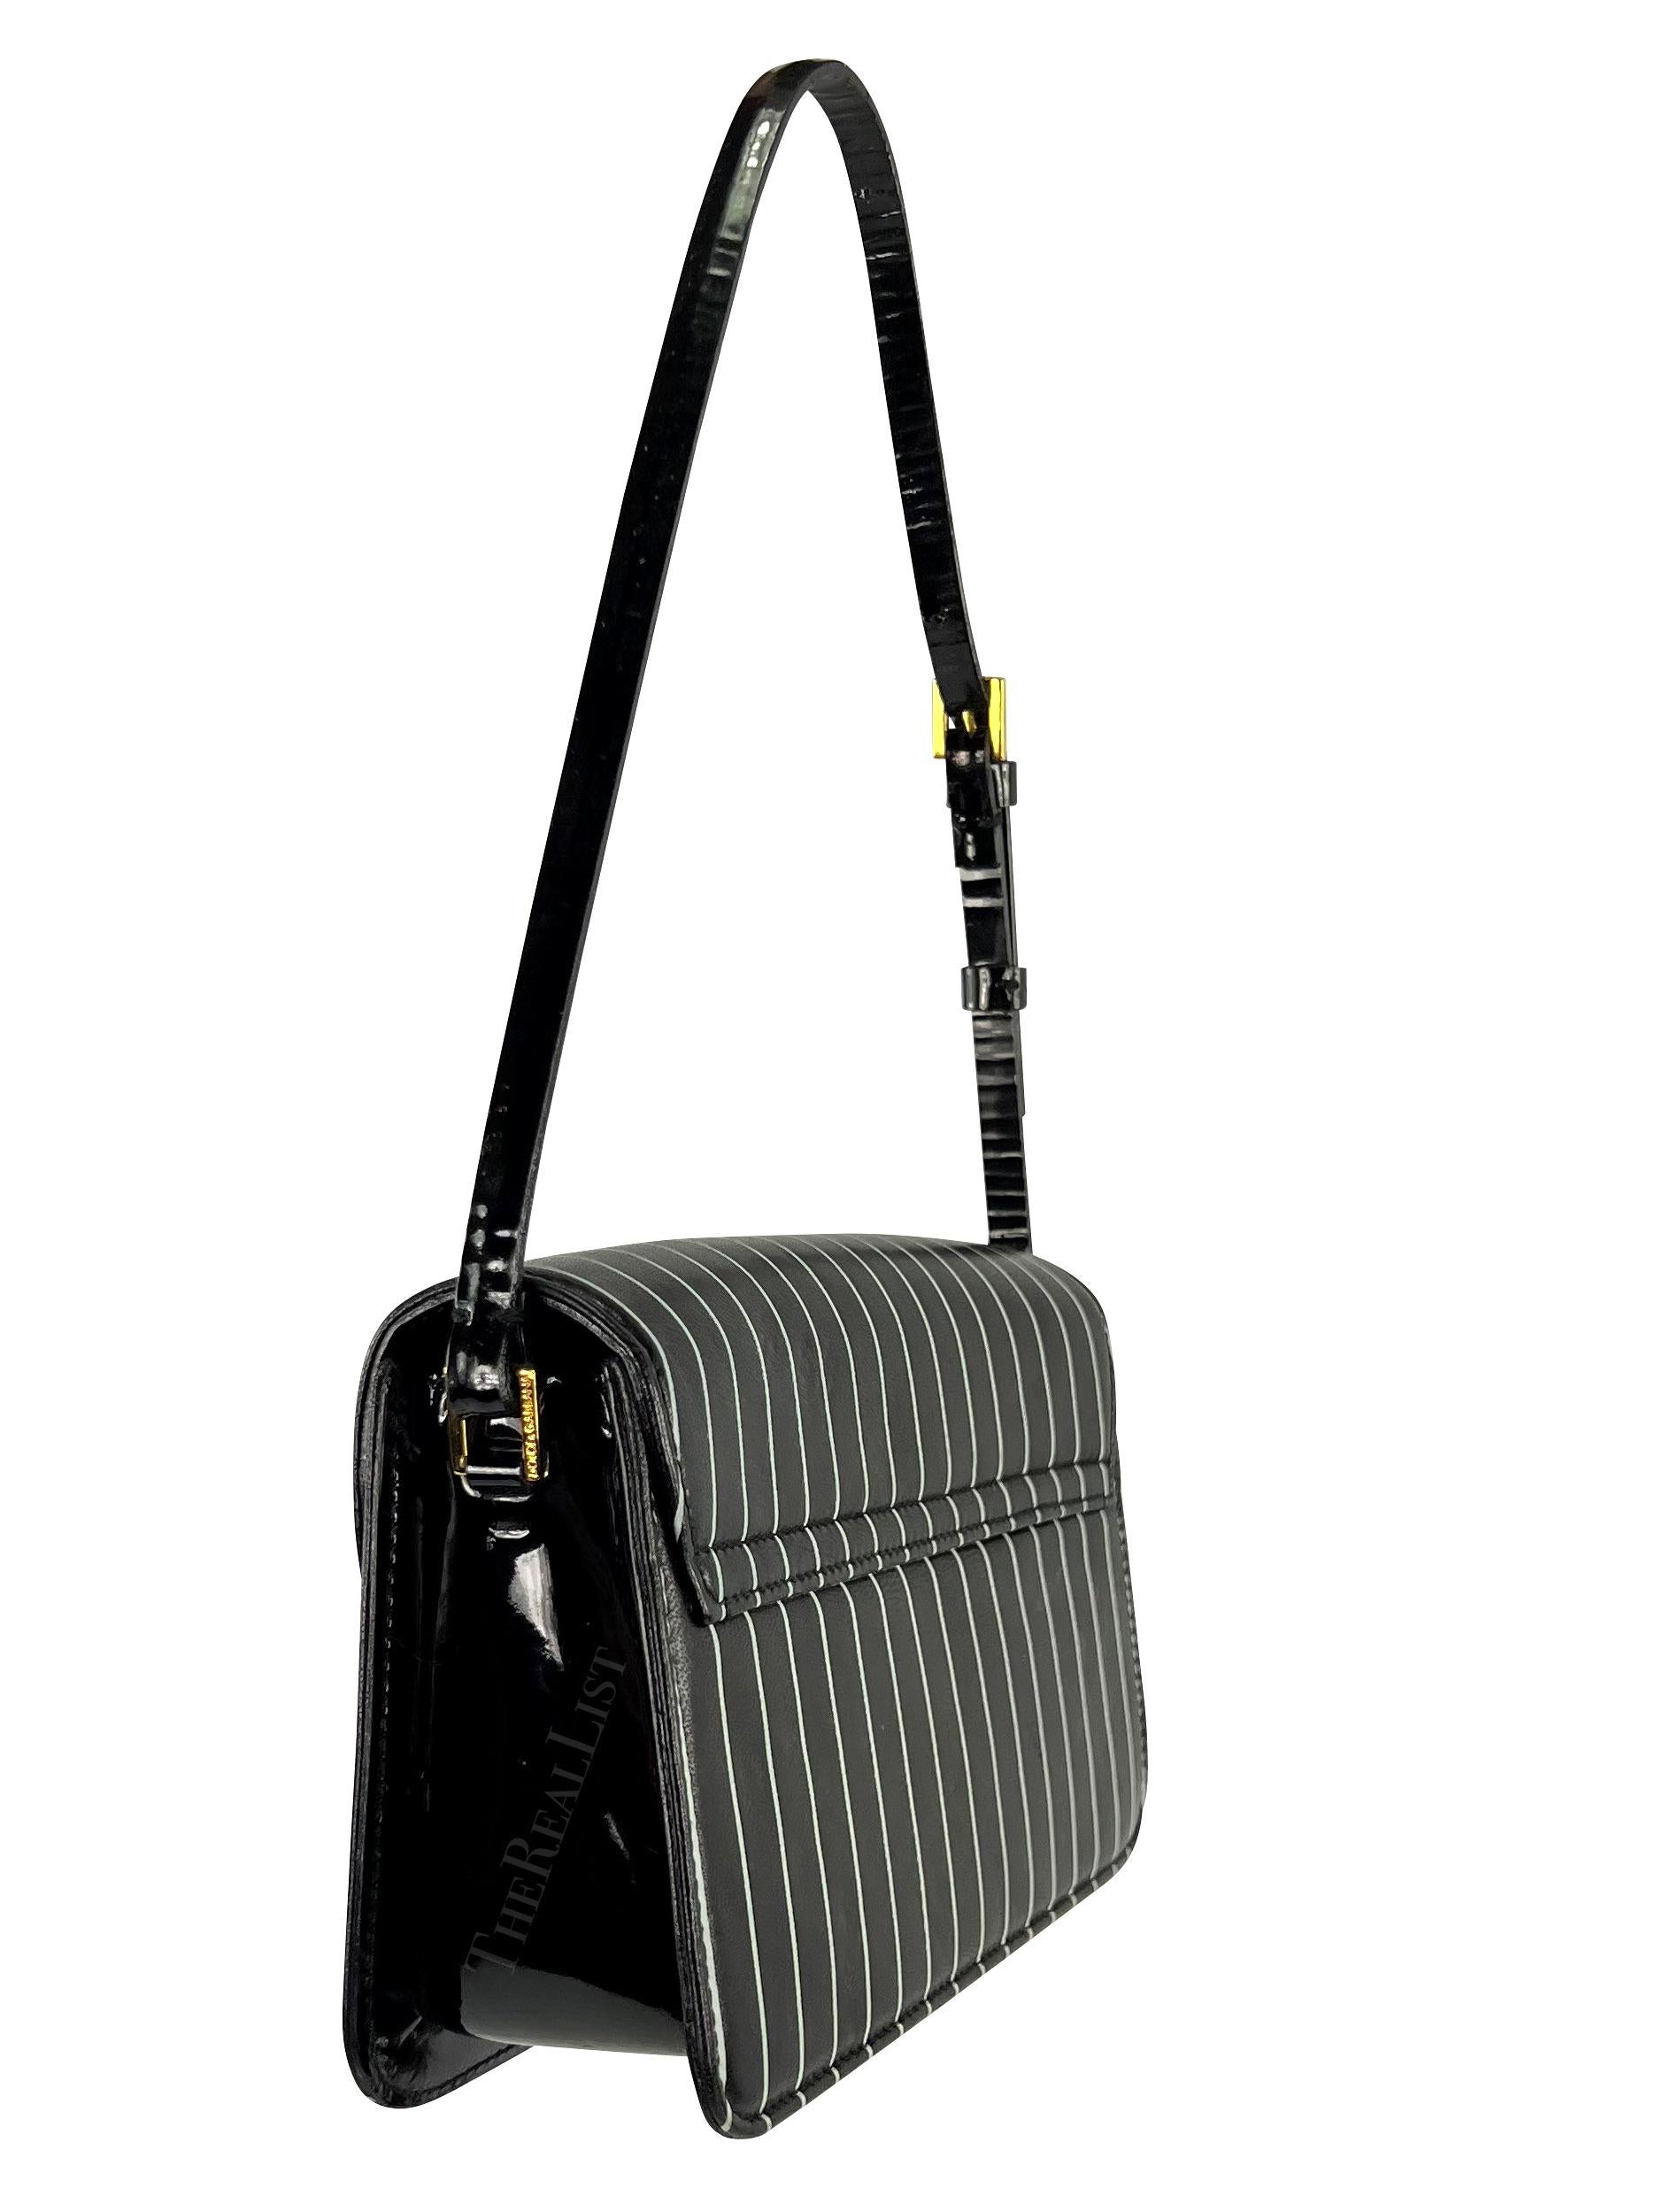 S/S 2001 Dolce & Gabbana Runway Black Pinstripe Leather Patent Mini Shoulder Bag For Sale 2